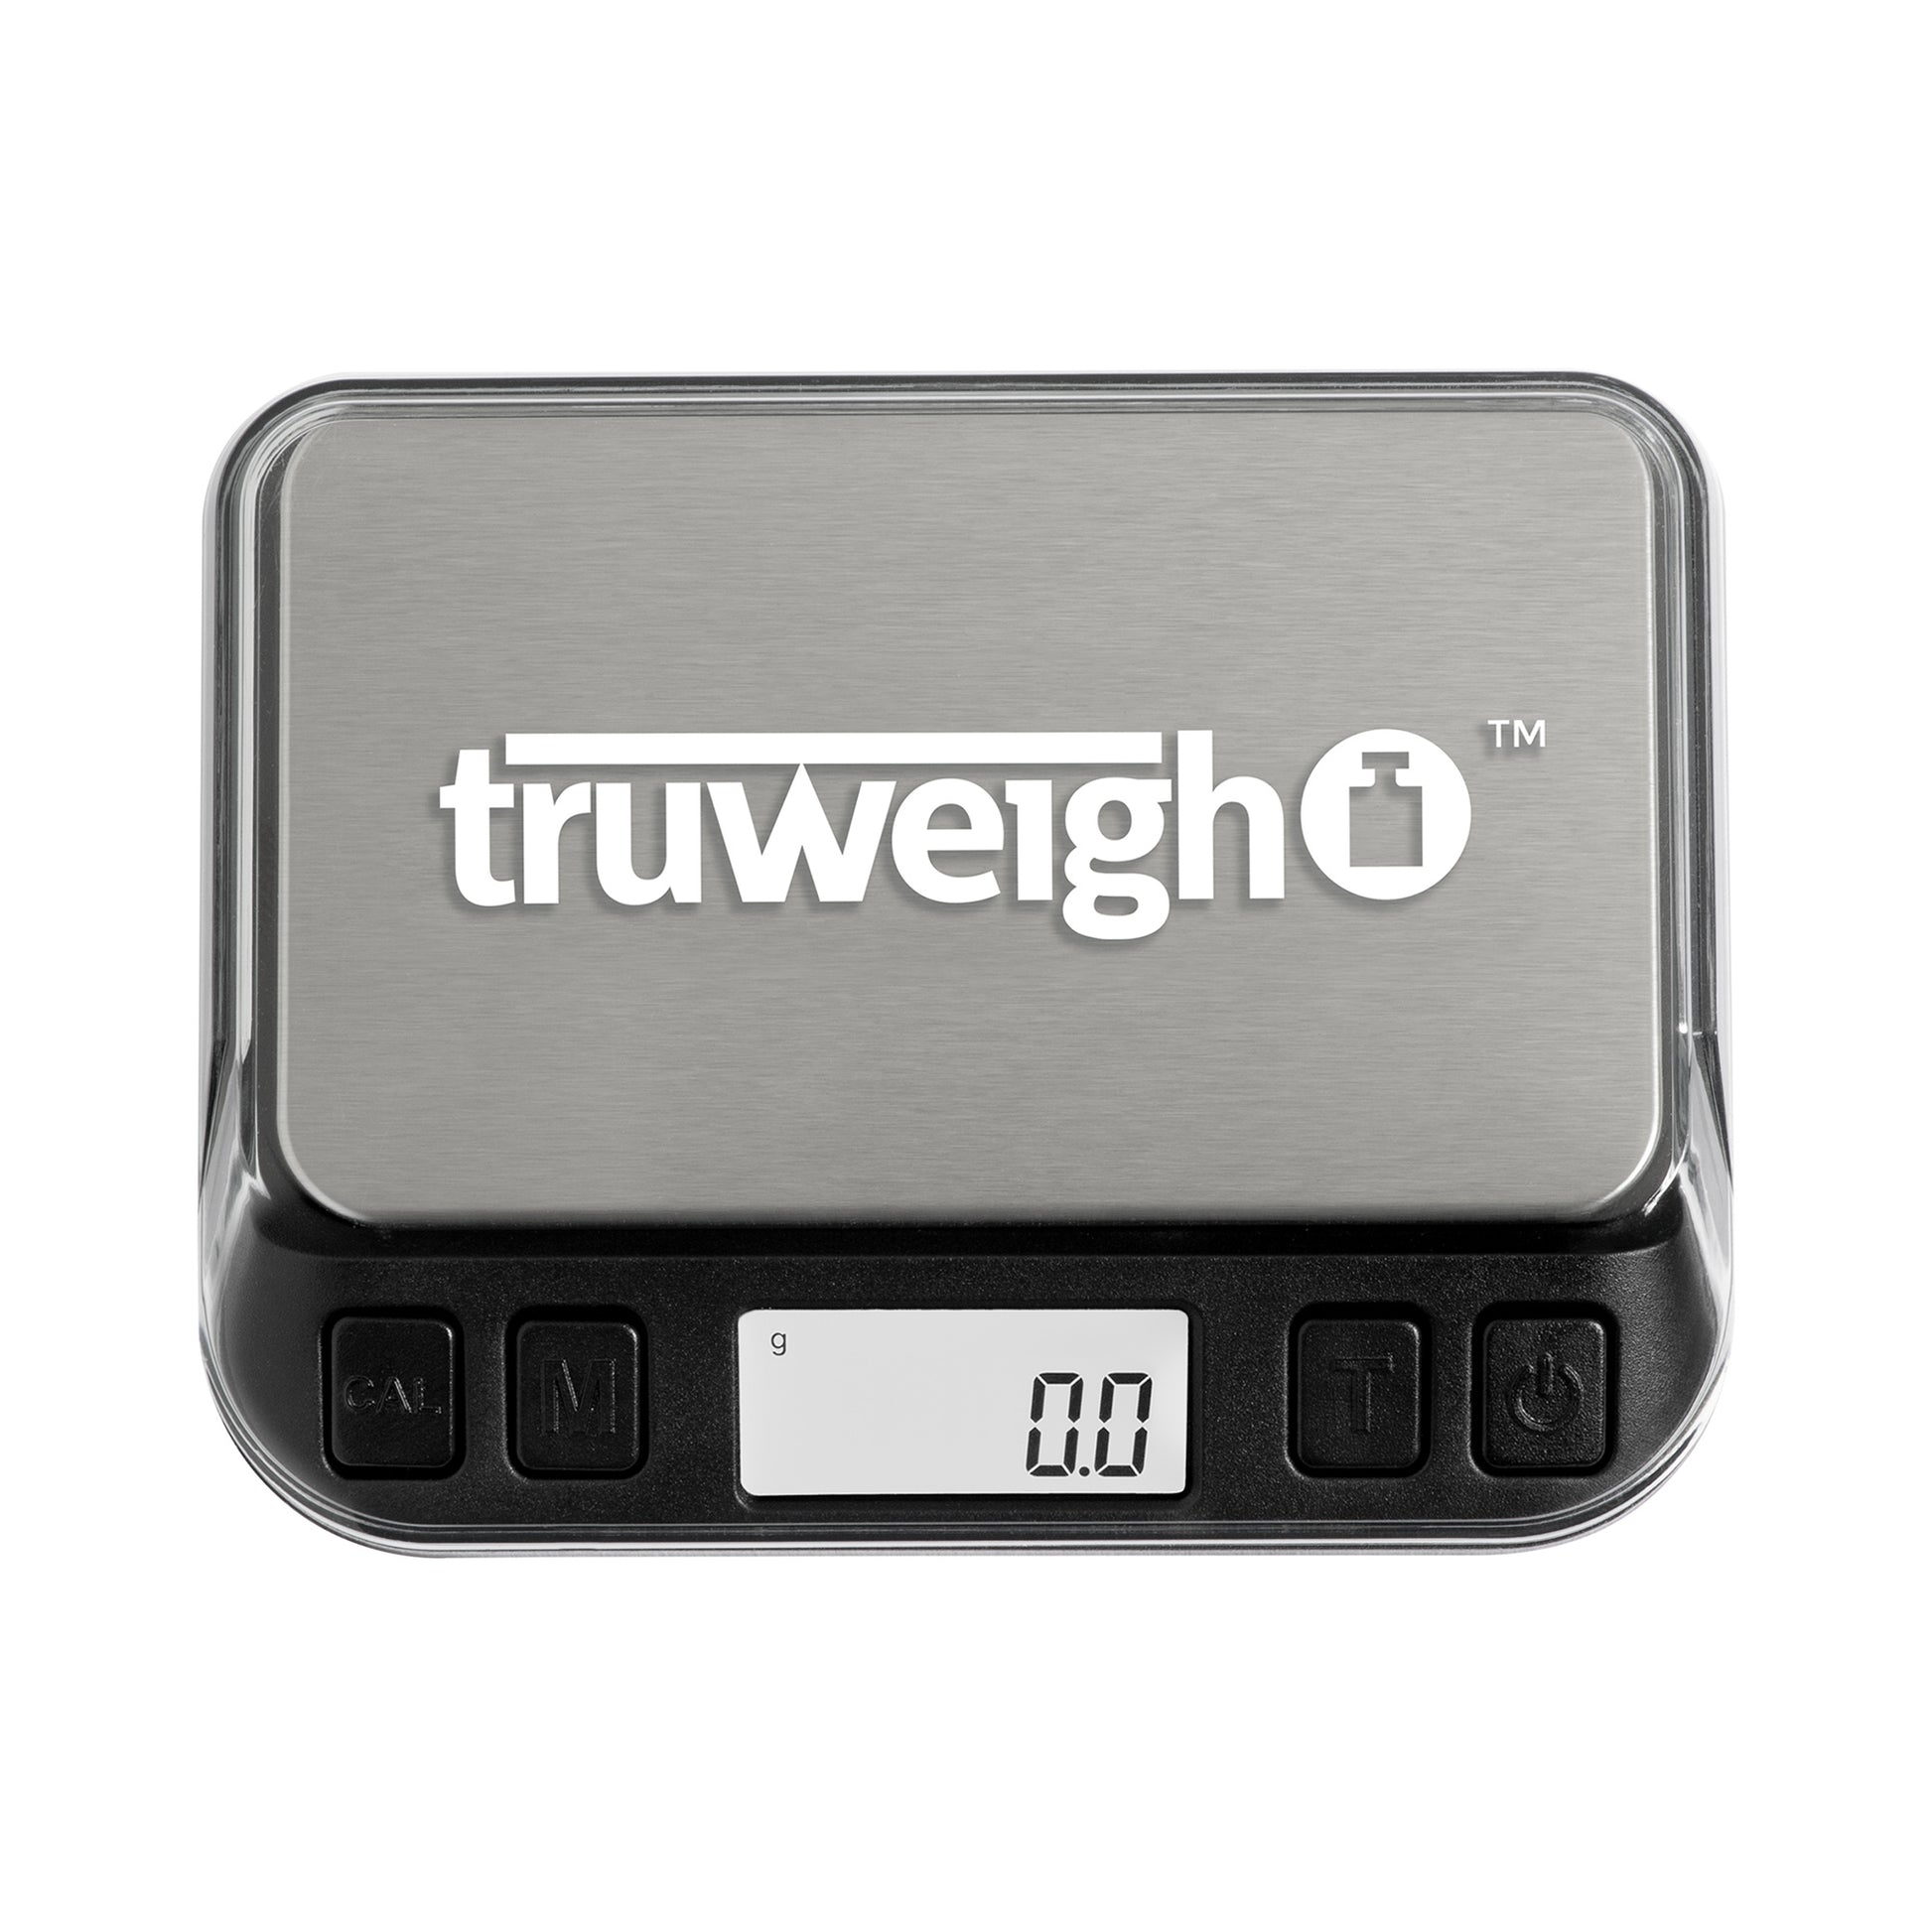 Truweigh Note Digital Scale 100g x .01g